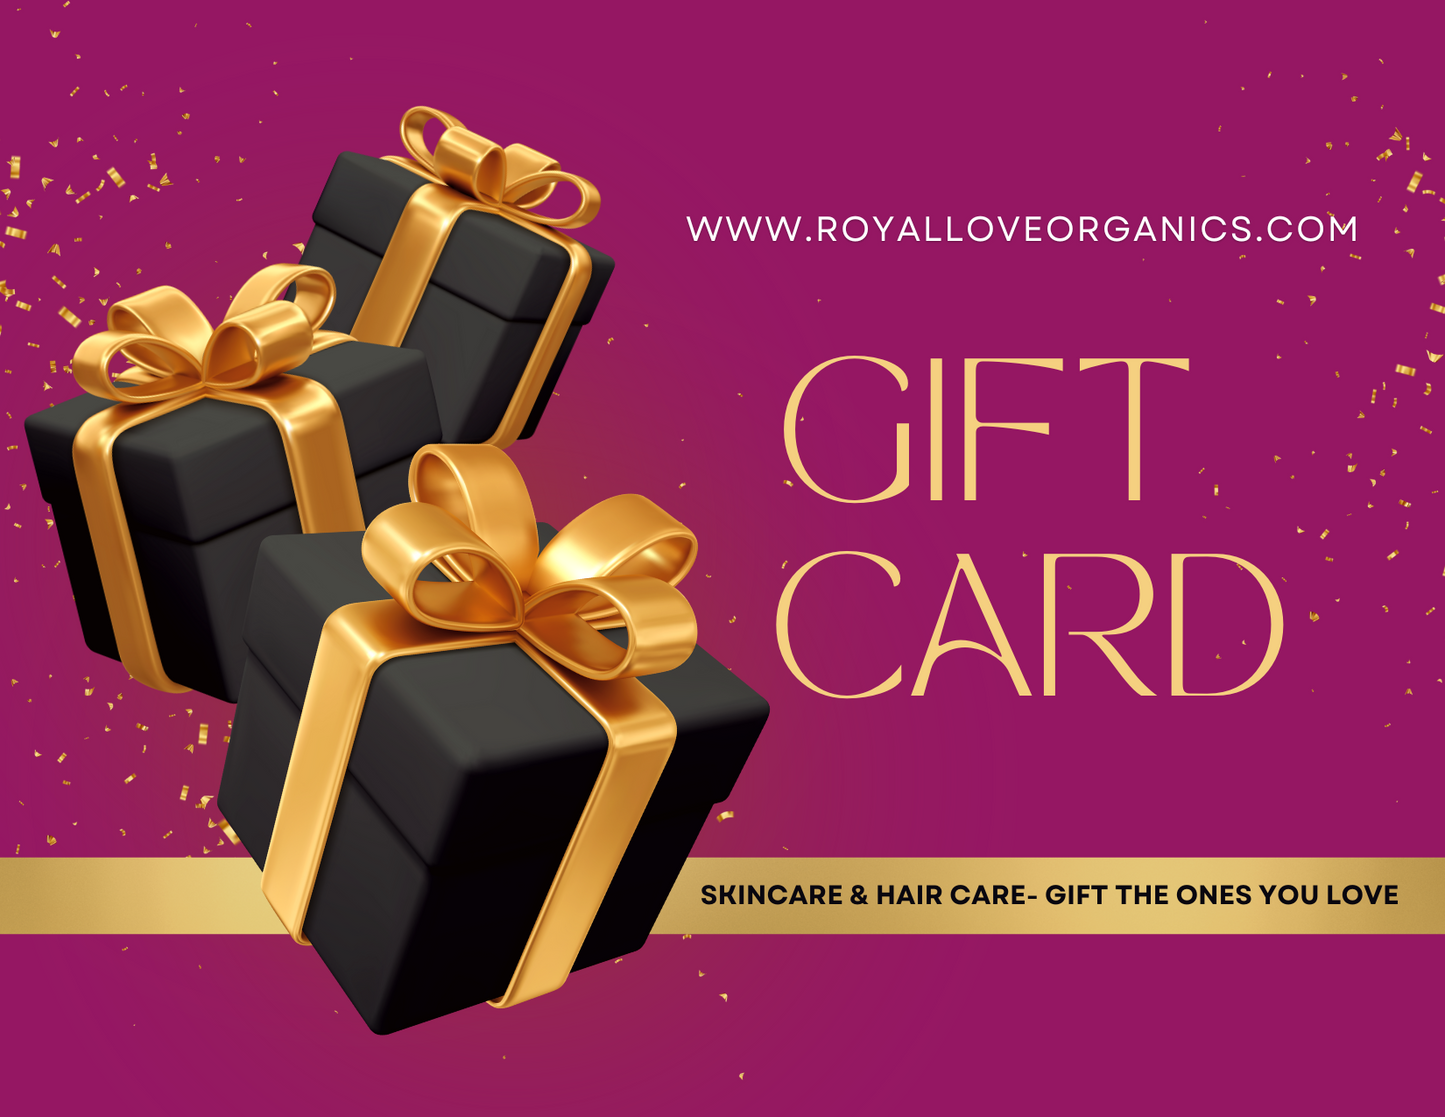 Royal Love Organics Gift Card